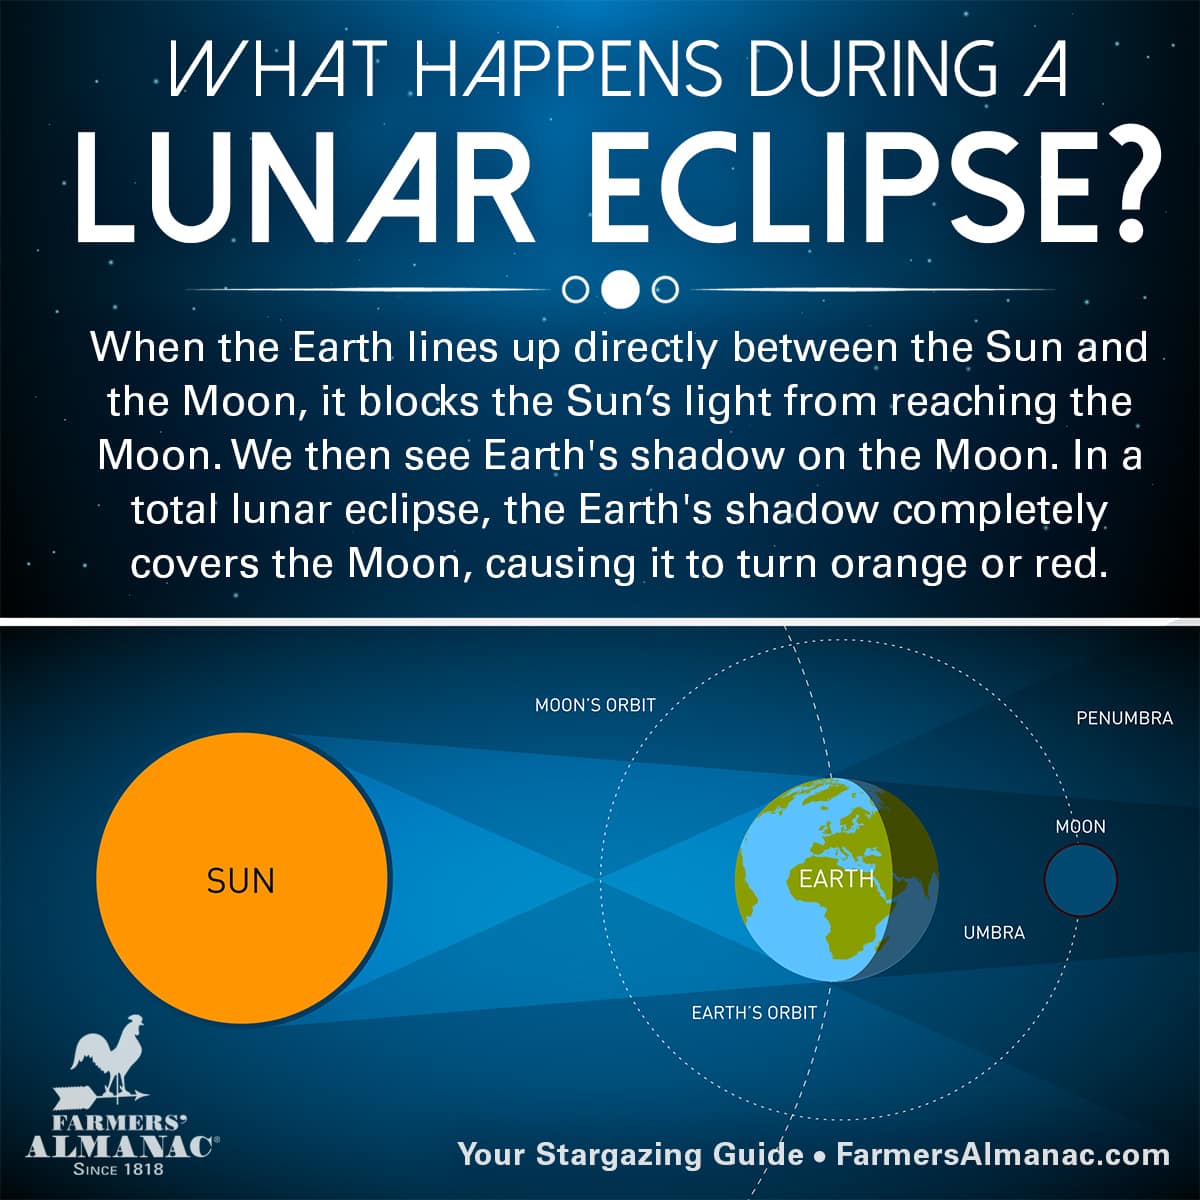 Lunar eclipse diagram
